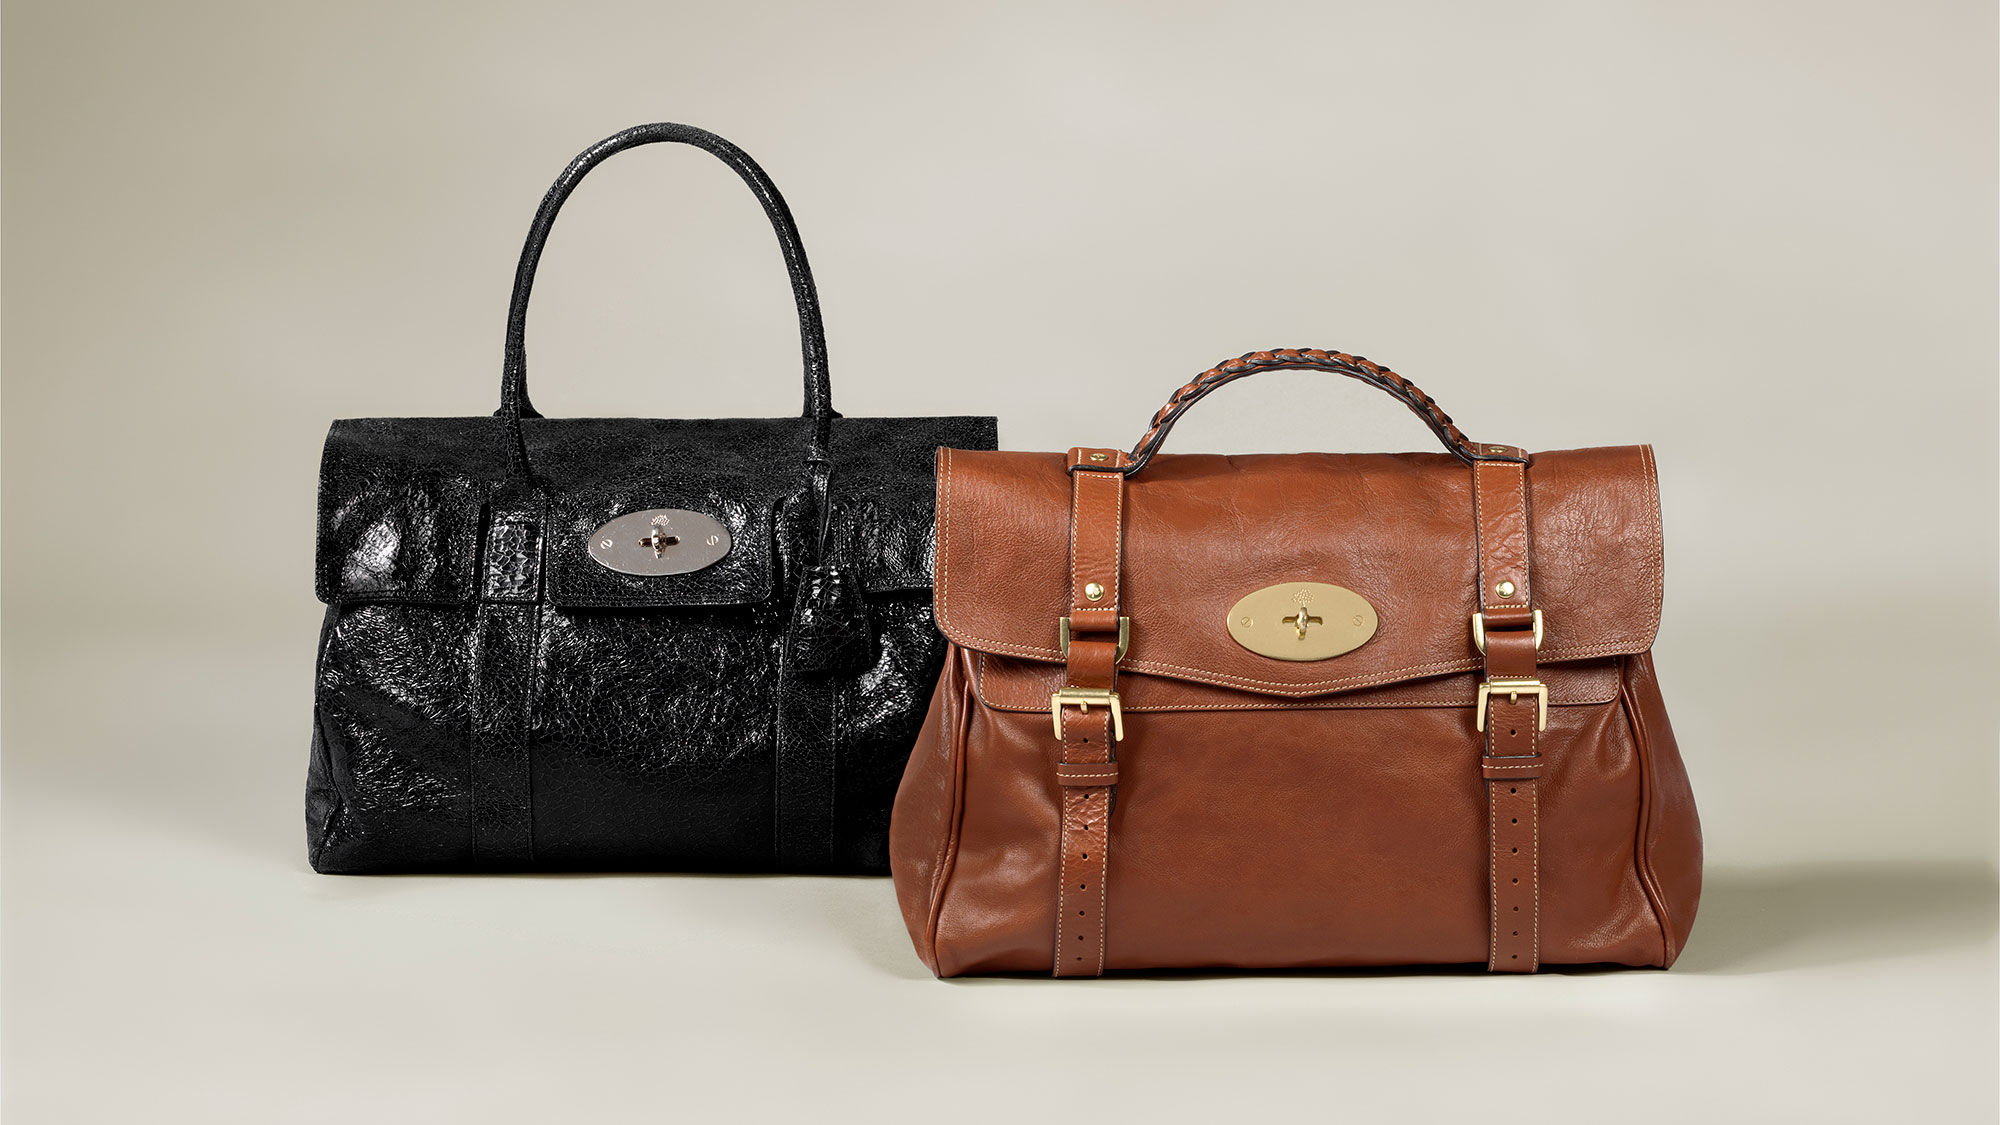 Money bags: the story behind Mulberry's Alexa, Handbags